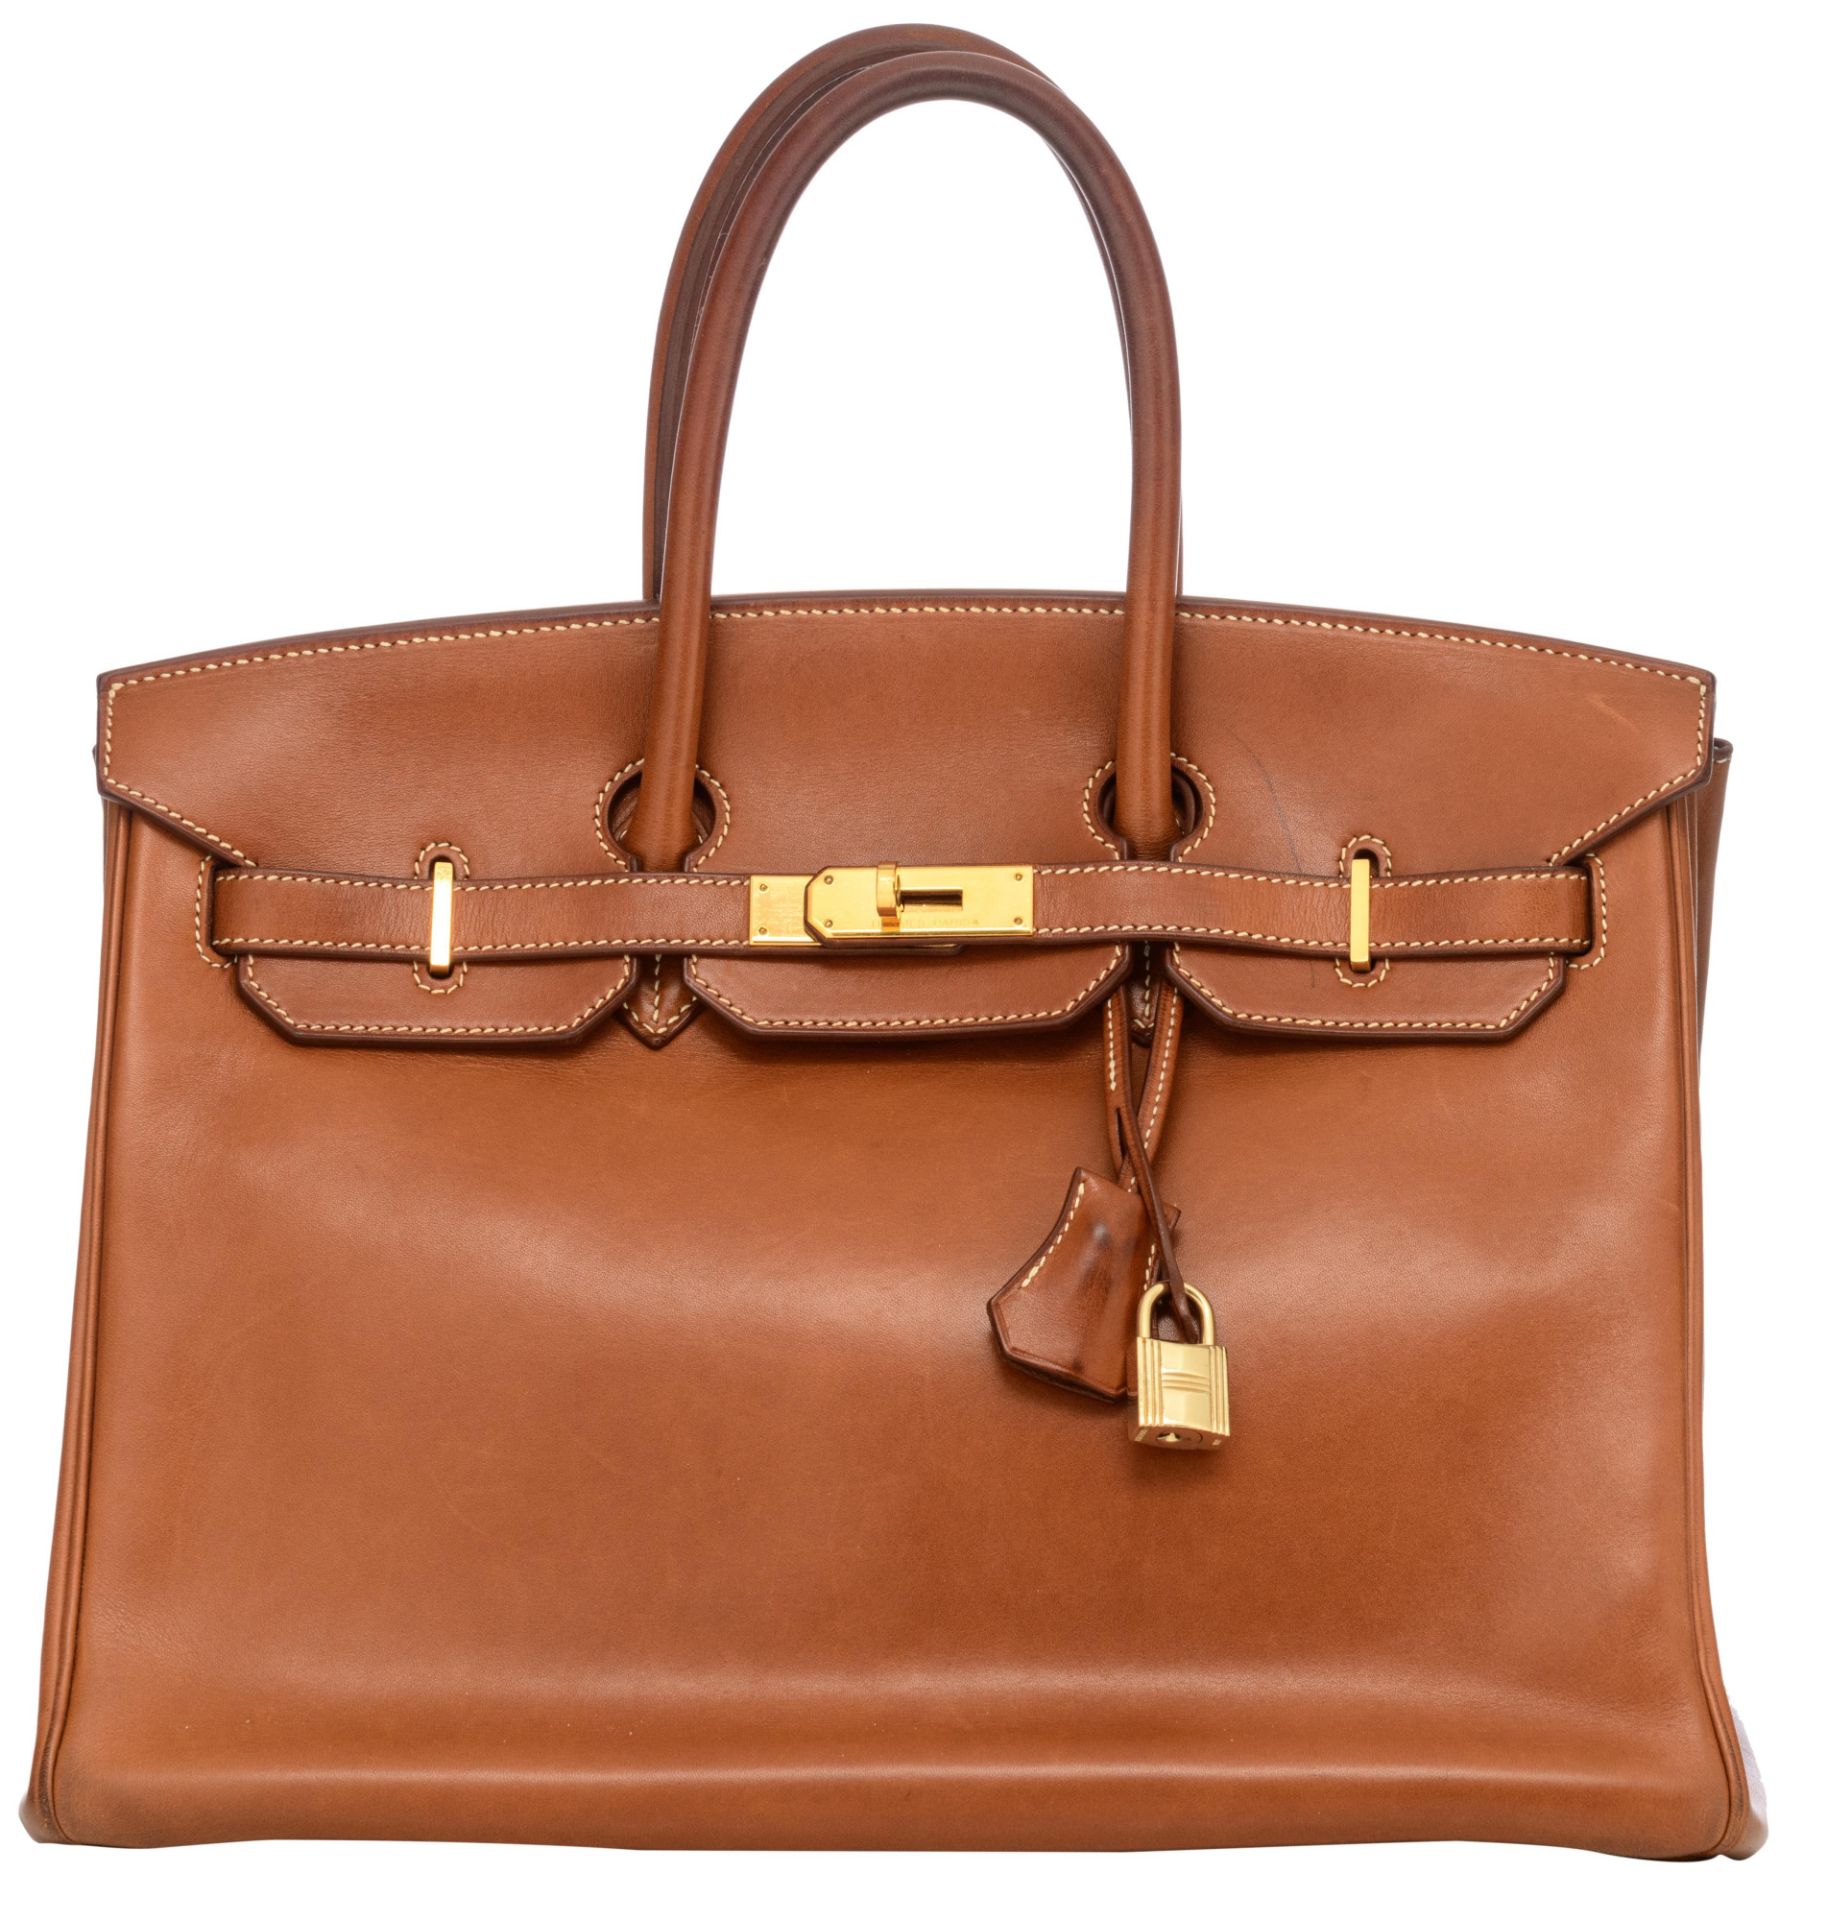 HERMÈS, Birkin 35 bag, Gold Barenia calfskin leather, with gilt metal hardware